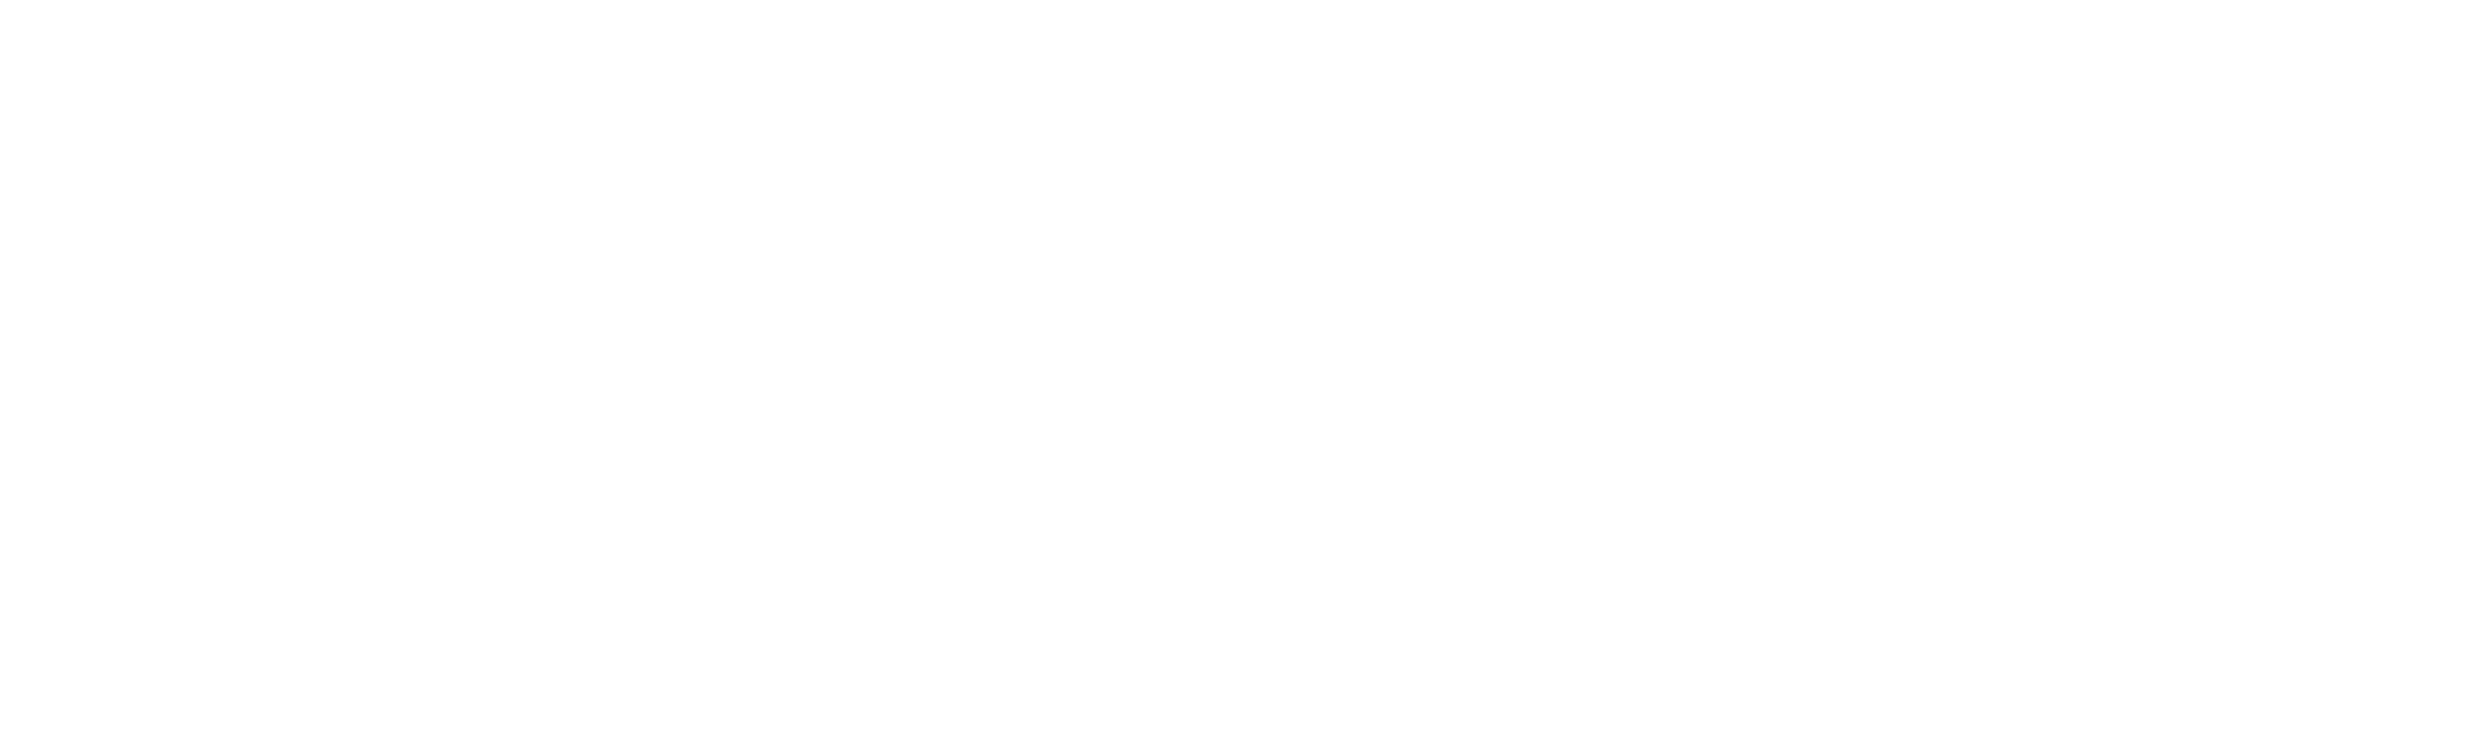 WebDistrict021 - Logo White